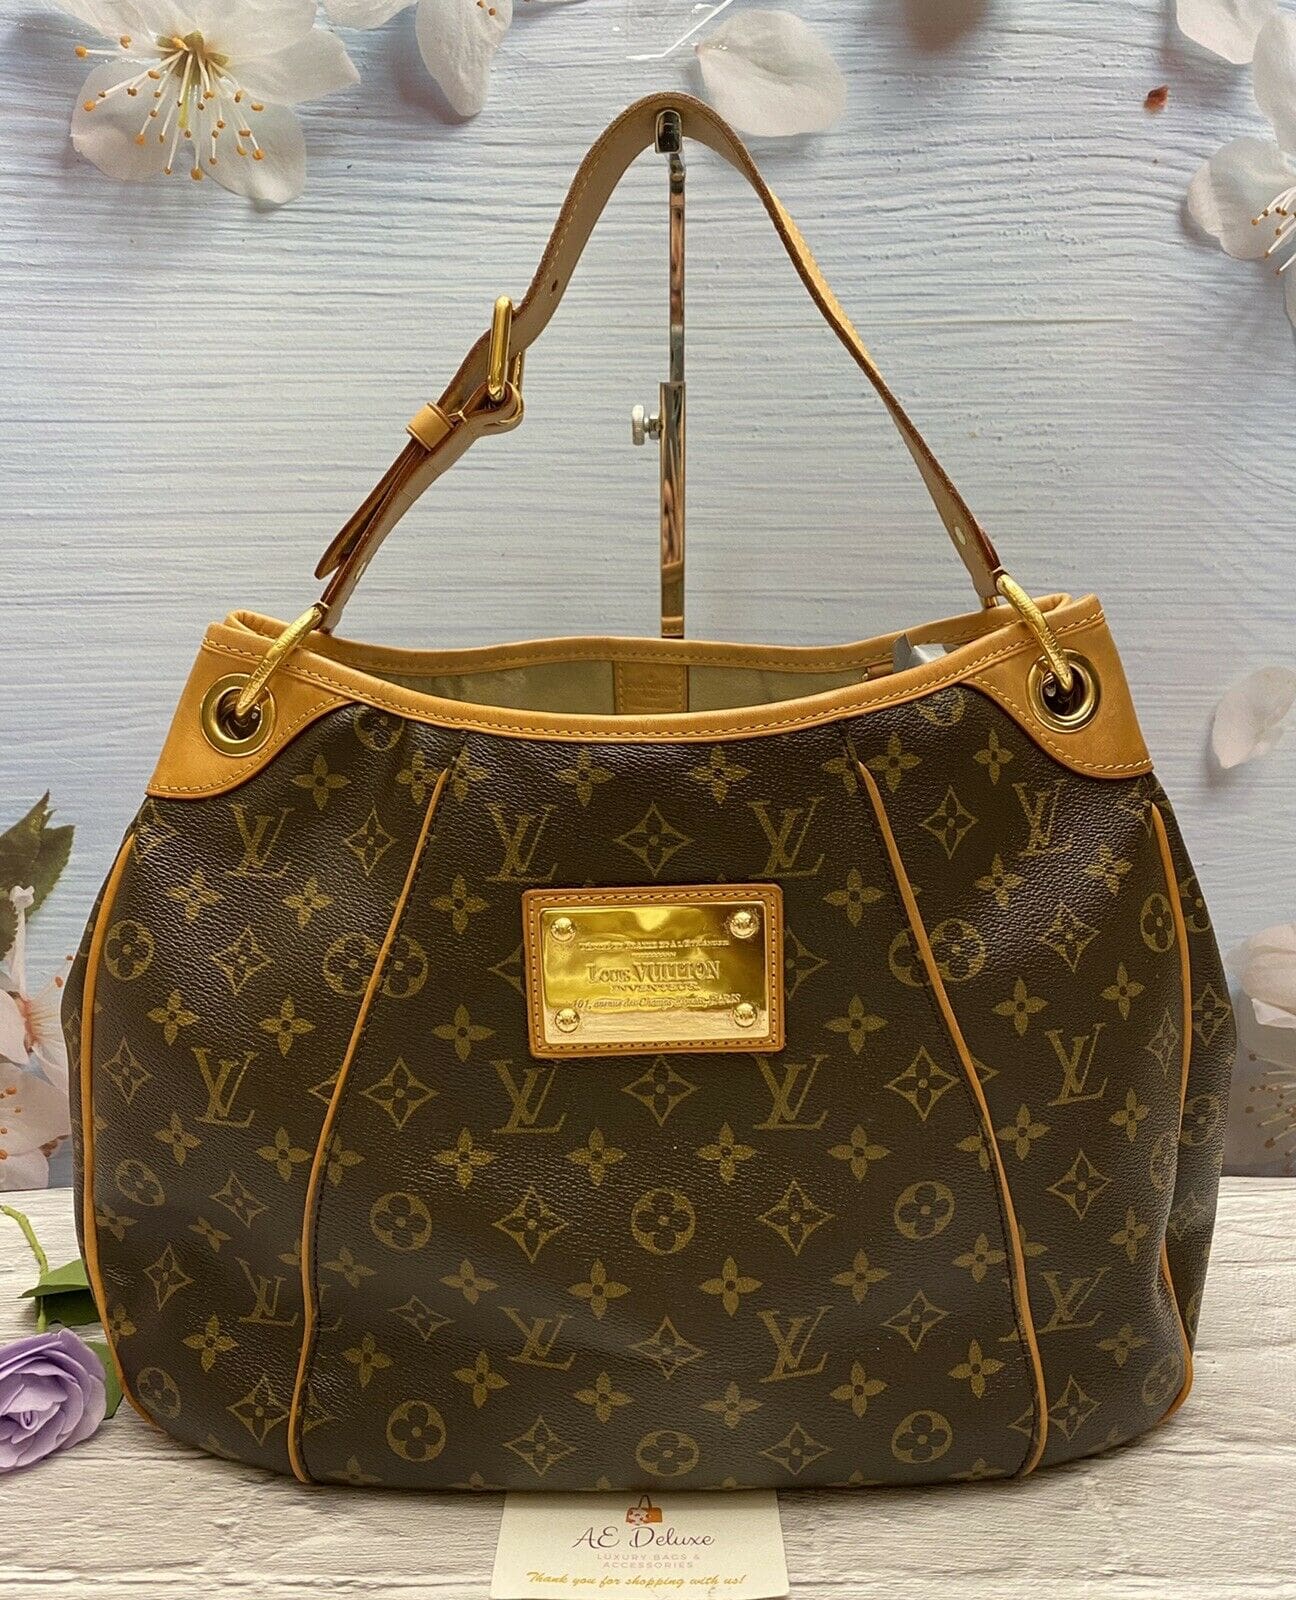 Louis Vuitton Galleria PM Shoulder Bag in Monogram - SOLD